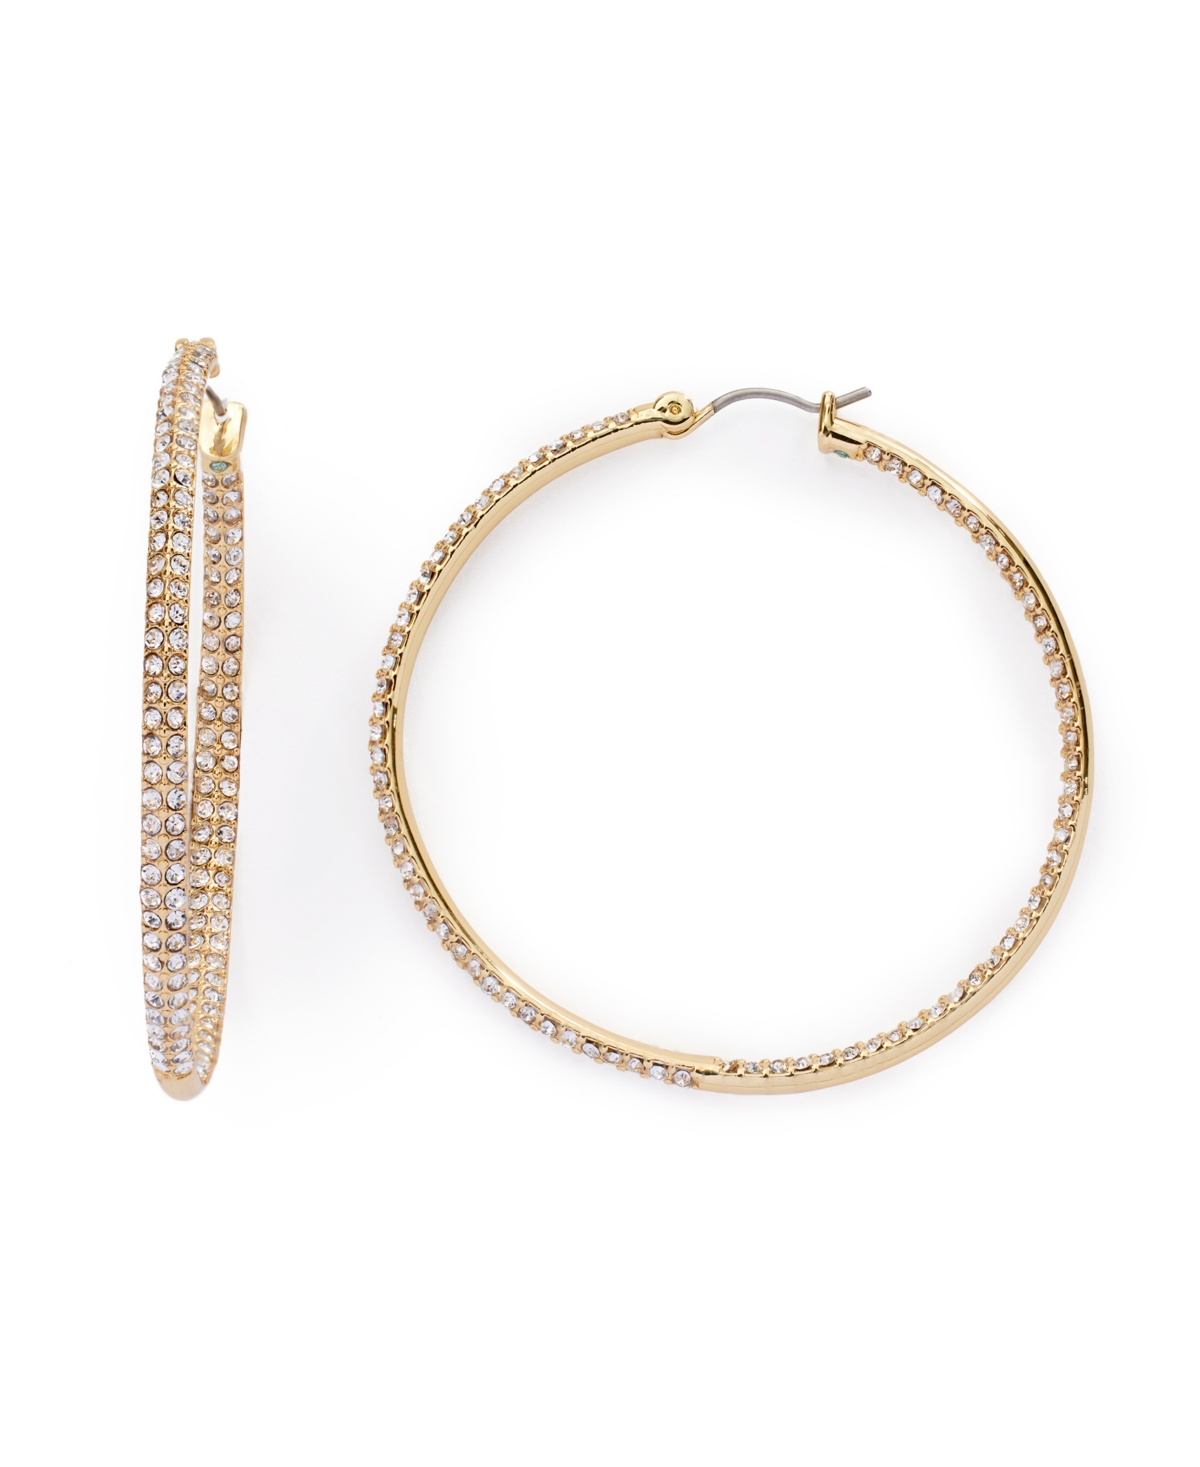 Faux Stone Pave Hoop Earrings - Crystal, Gold